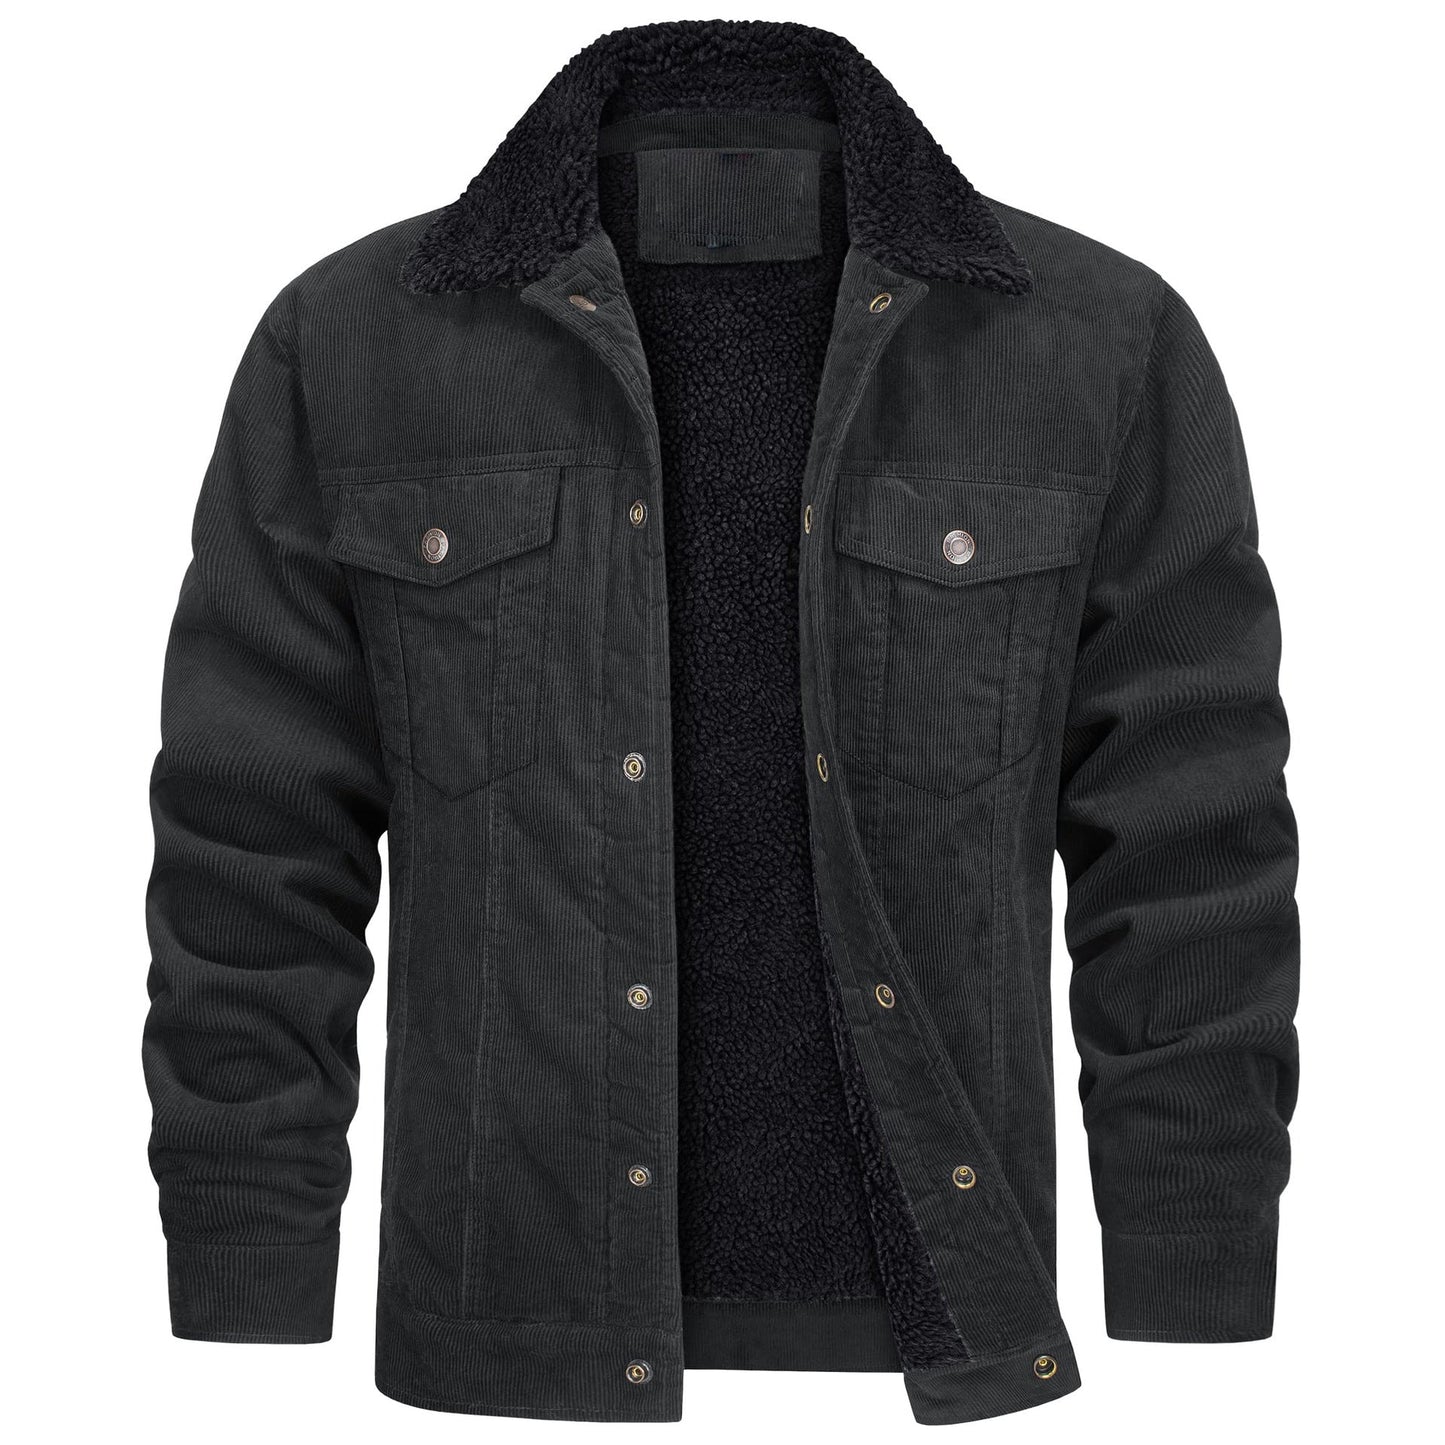 Casual Winter Long Sleeves Velvet Jacket Coats for Men-Coats & Jackets-Black-1-S-Free Shipping at meselling99